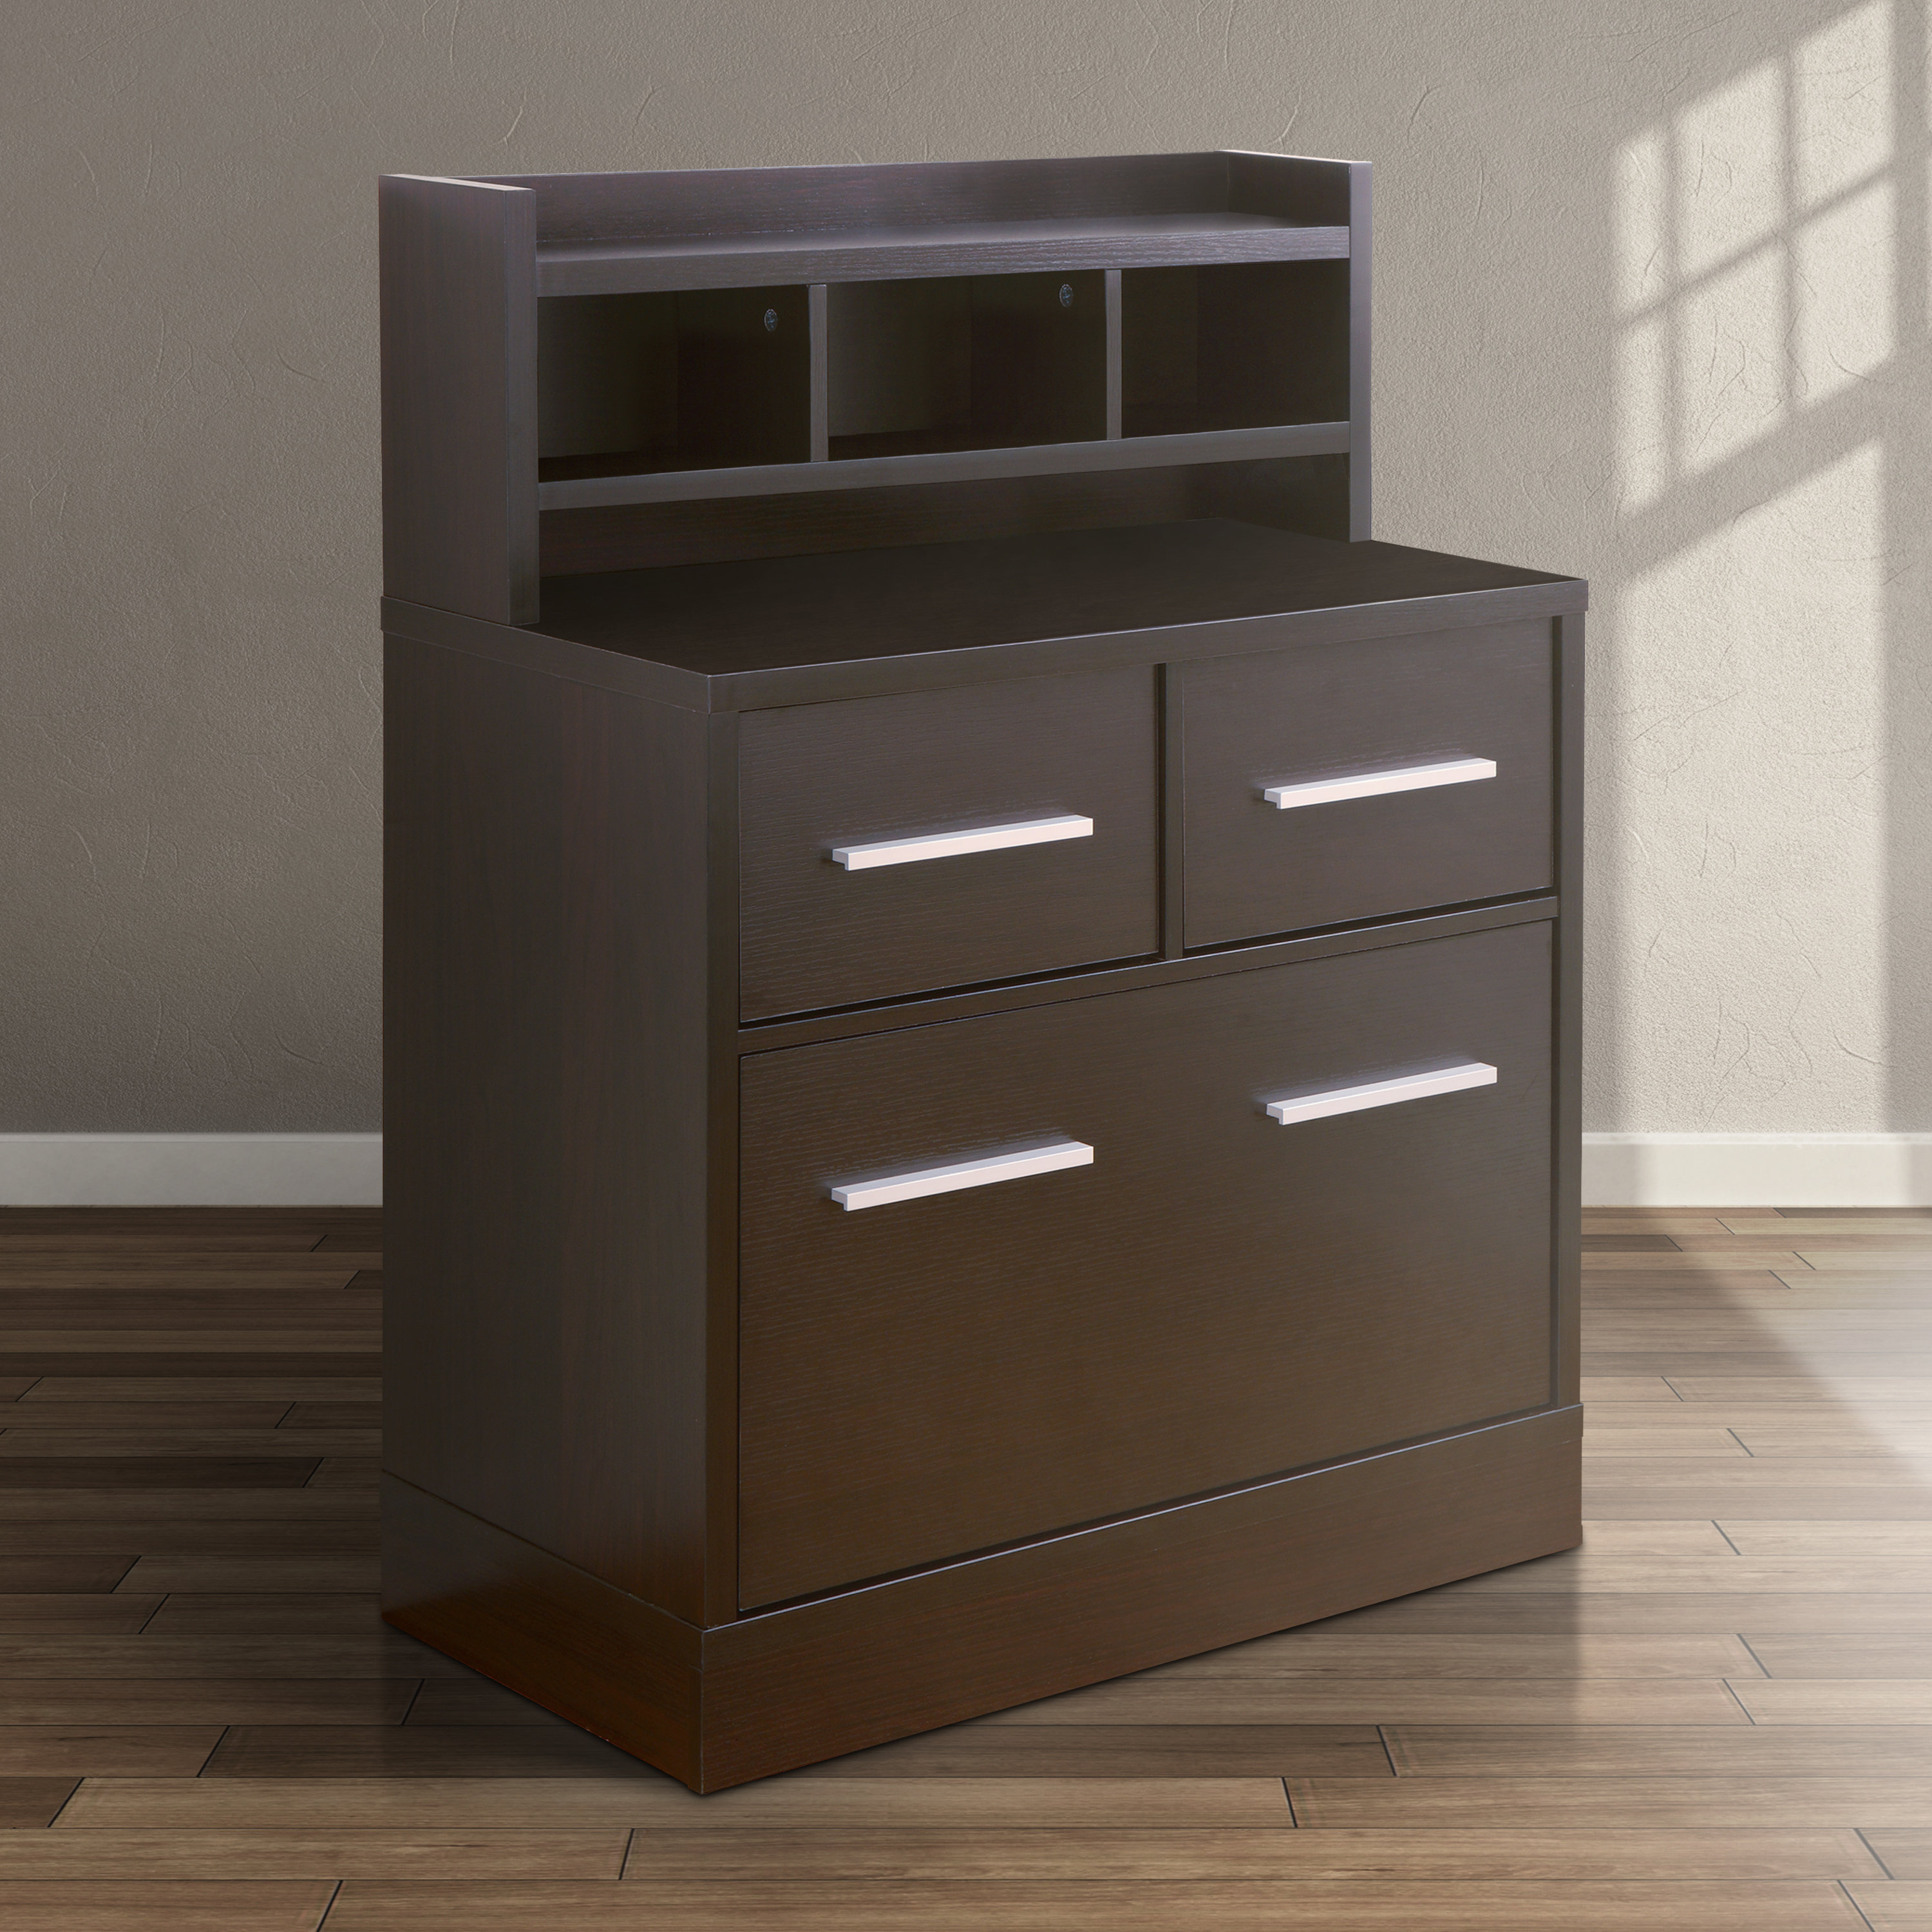 Hokku Designs 3 Drawer Lateral Filing Cabinet Reviews Wayfair regarding measurements 3000 X 3000